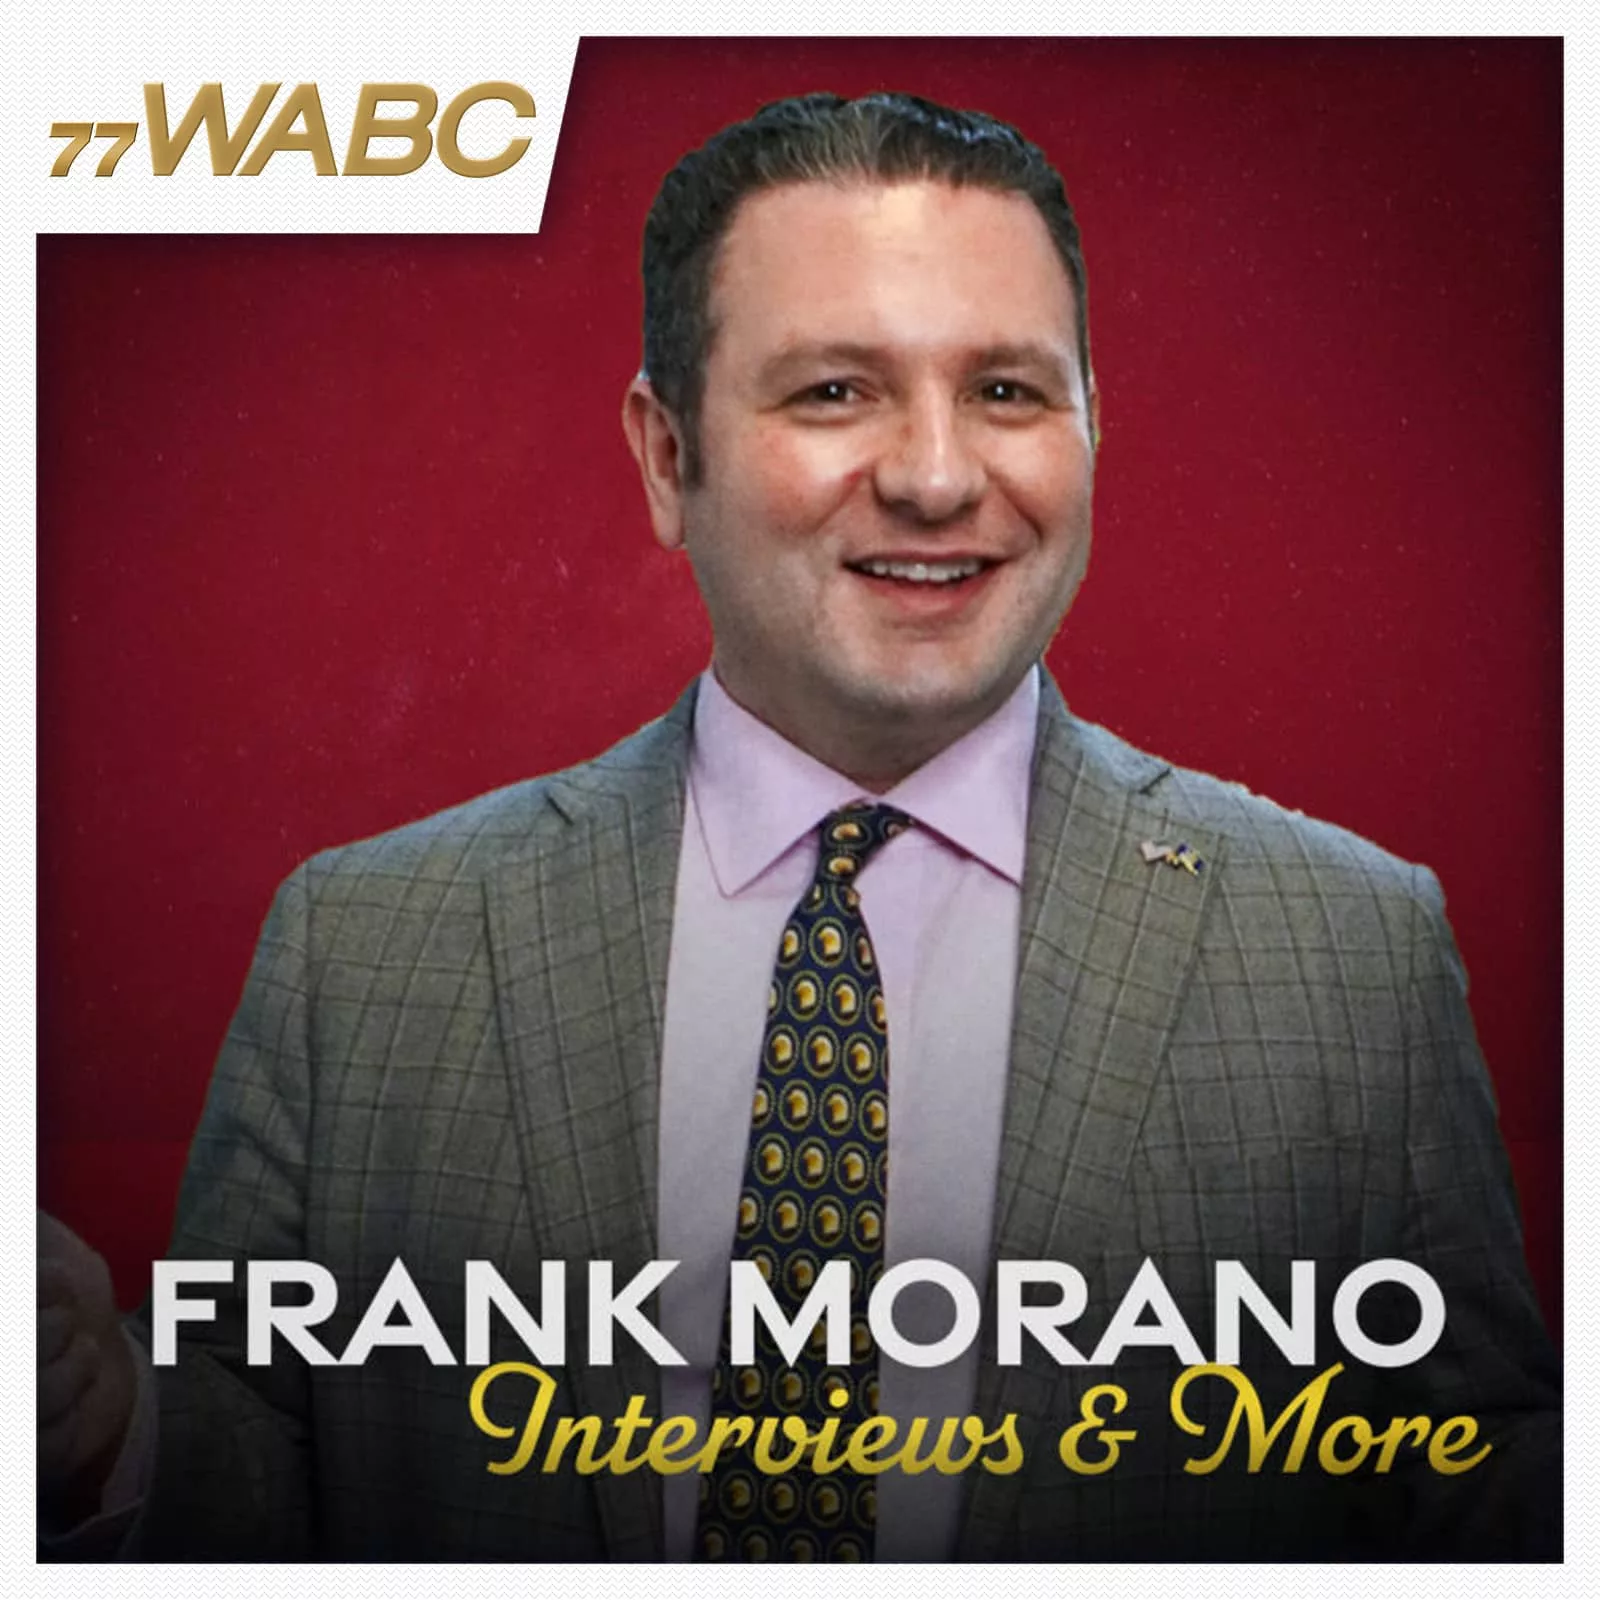 frank-morano-interviews-and-more-podcast-new-logo69467